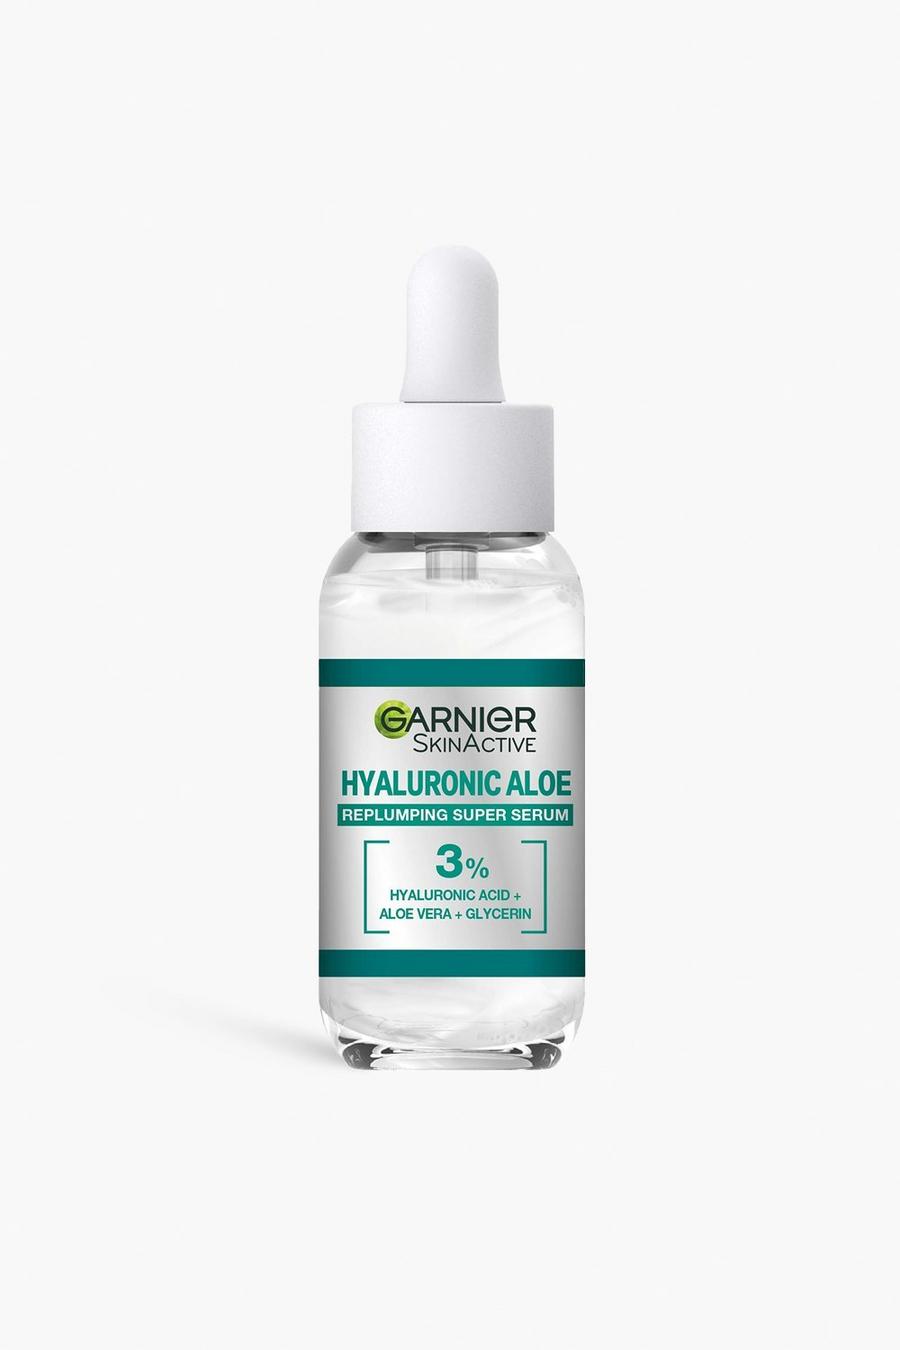 White Garnier SkinActive Hyaluronic Aloe Super Serum, With 3% Hyaluronic Acid Aloe Vera & Glycerin image number 1